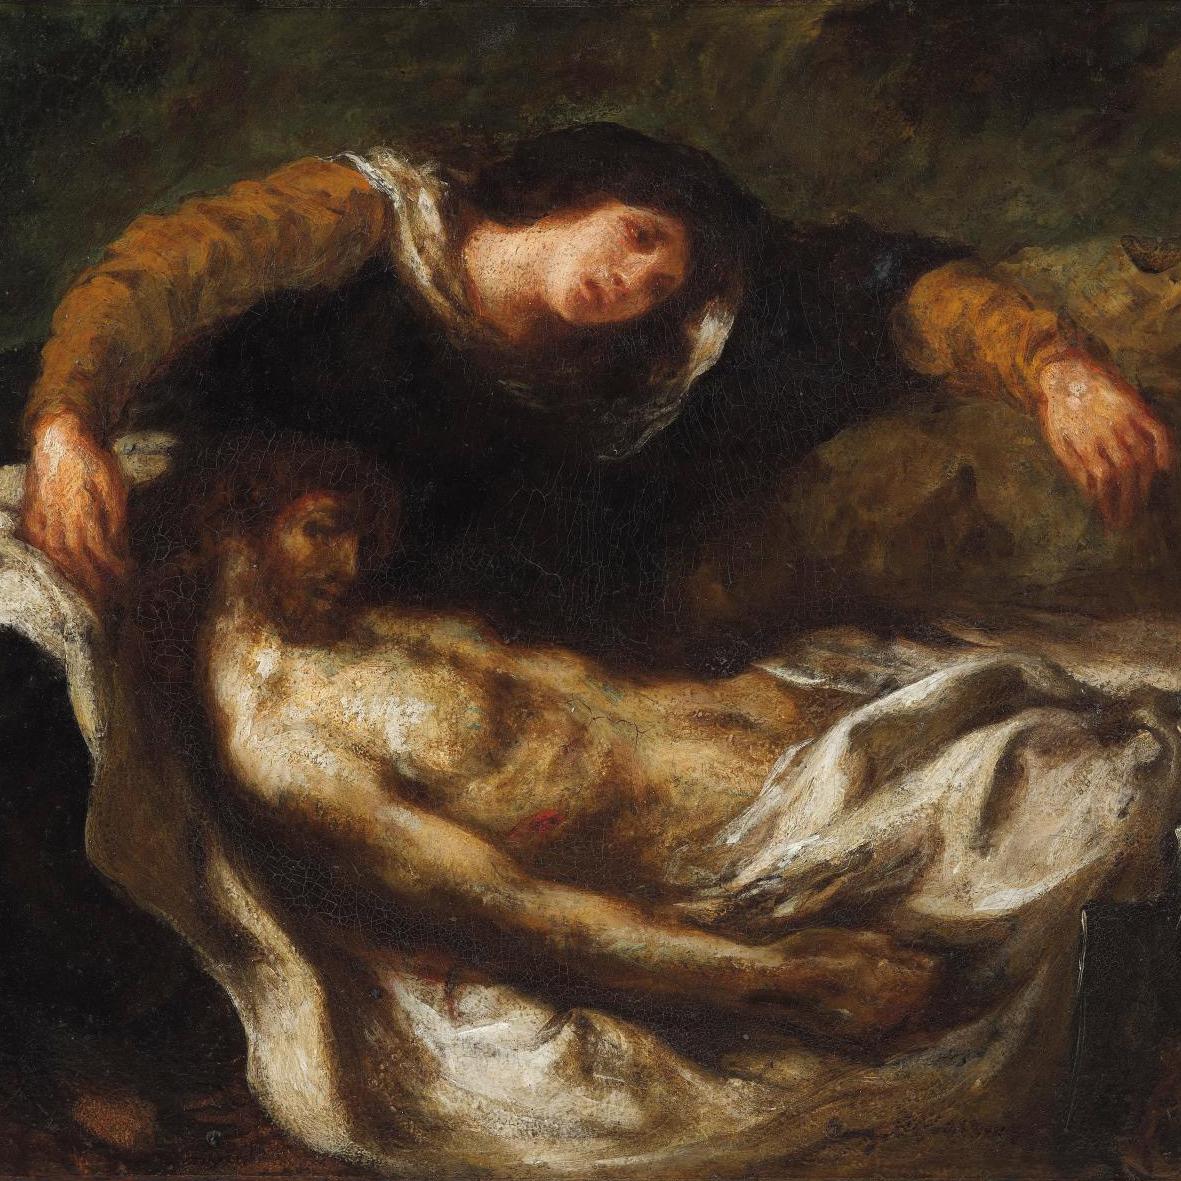 Eugène Delacroix: An Impassioned Believer  - Pre-sale